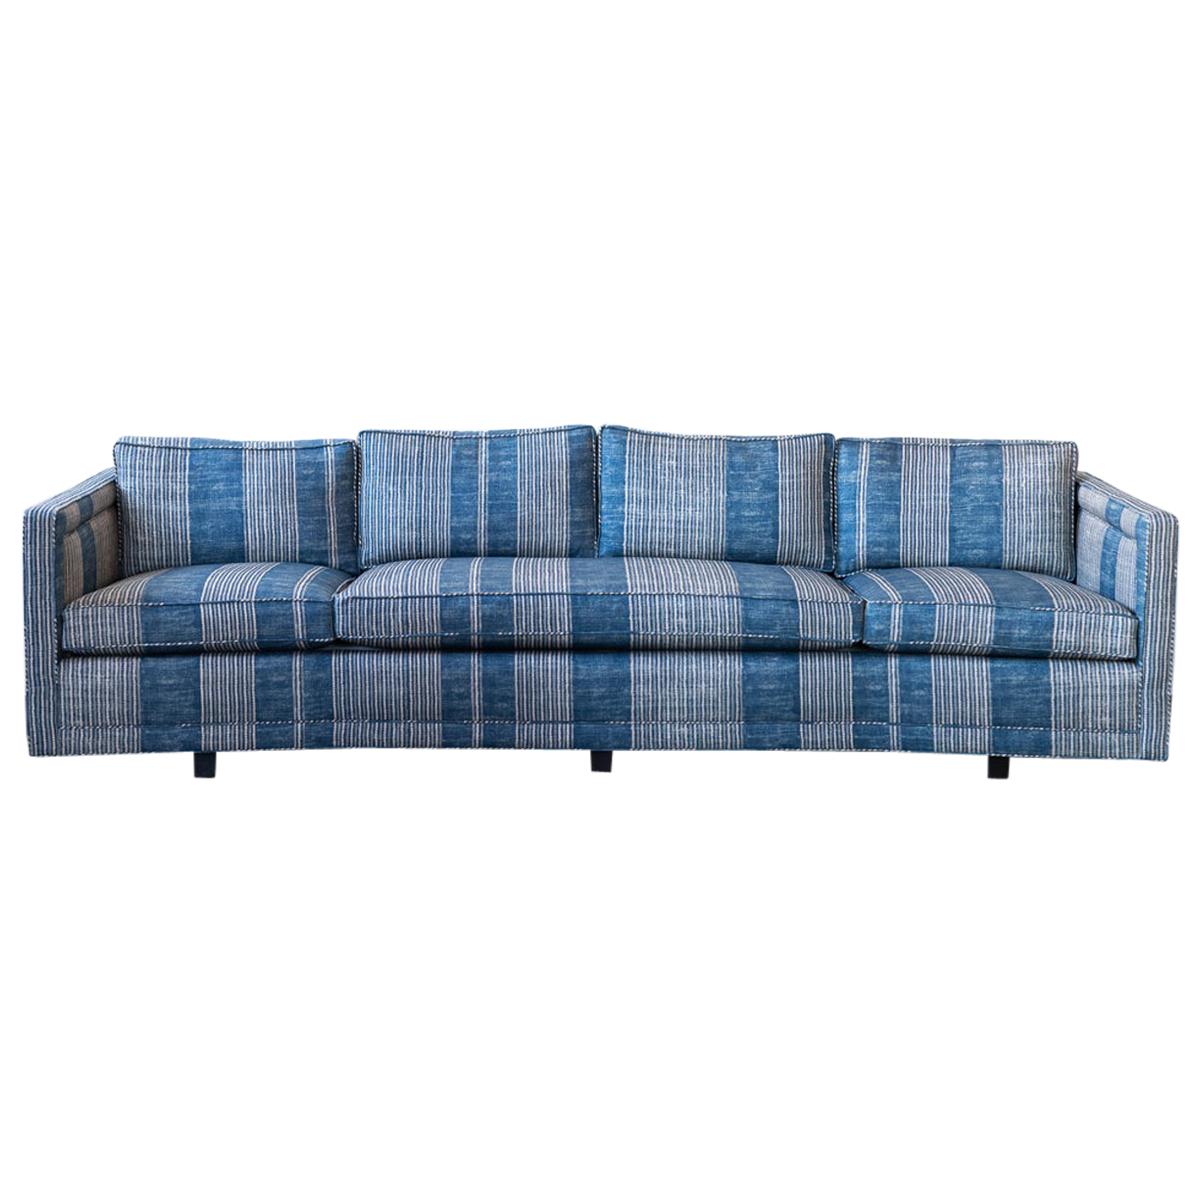 Vintage Erwin Lambeth Sofa Recovered in Blue Robert Kime Fabric